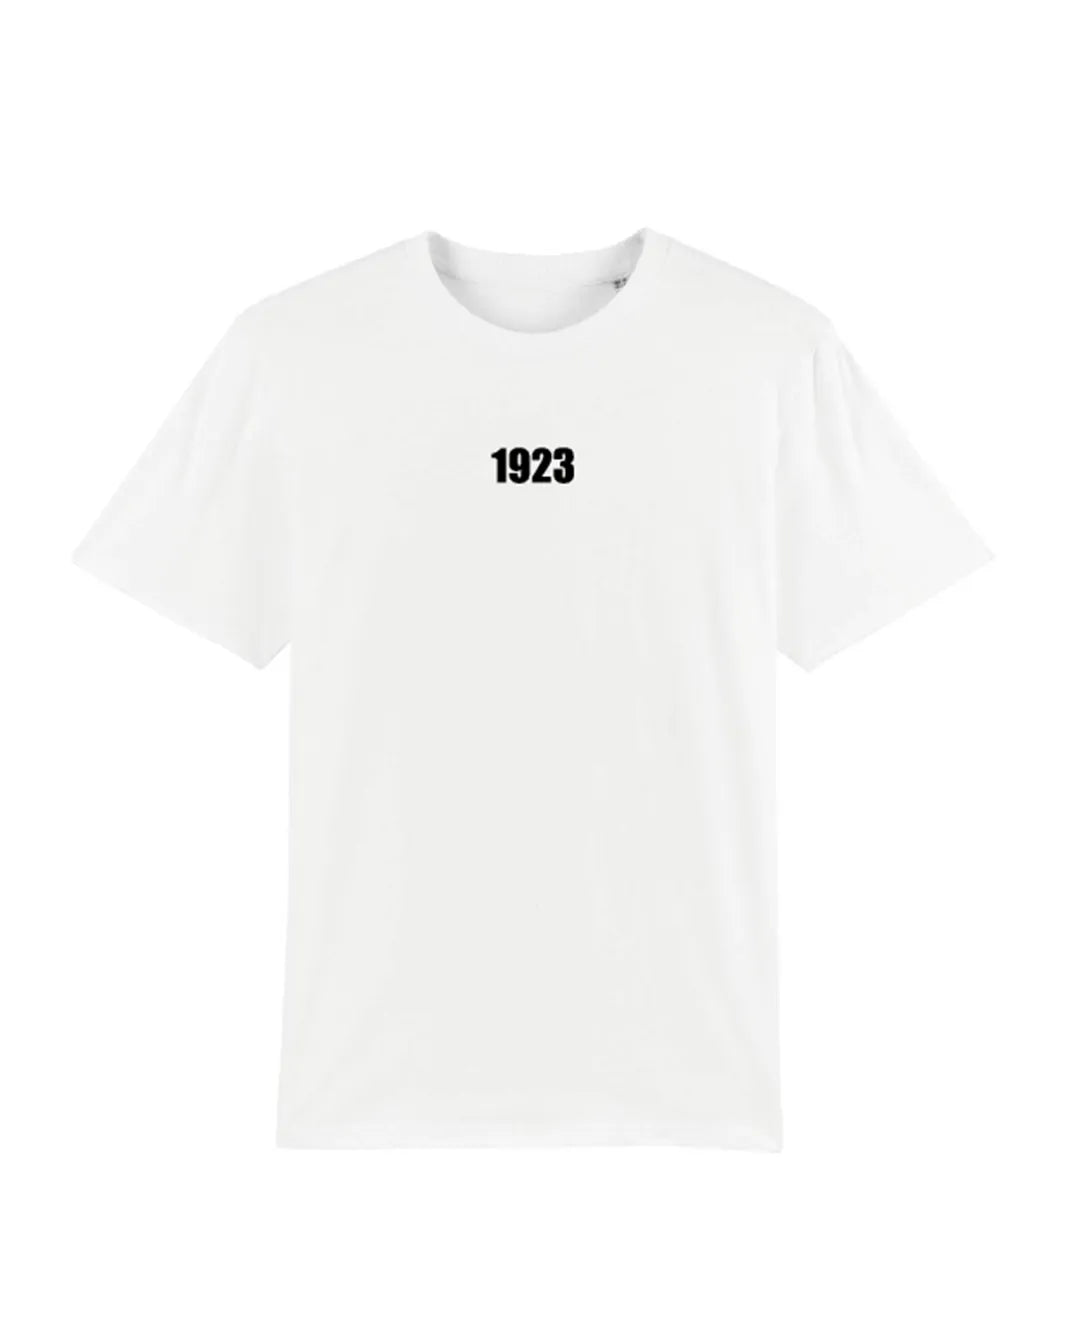 T-Shirt Ludwig-Meyn-Gymnasium Uetersen 1923 Jubiläum